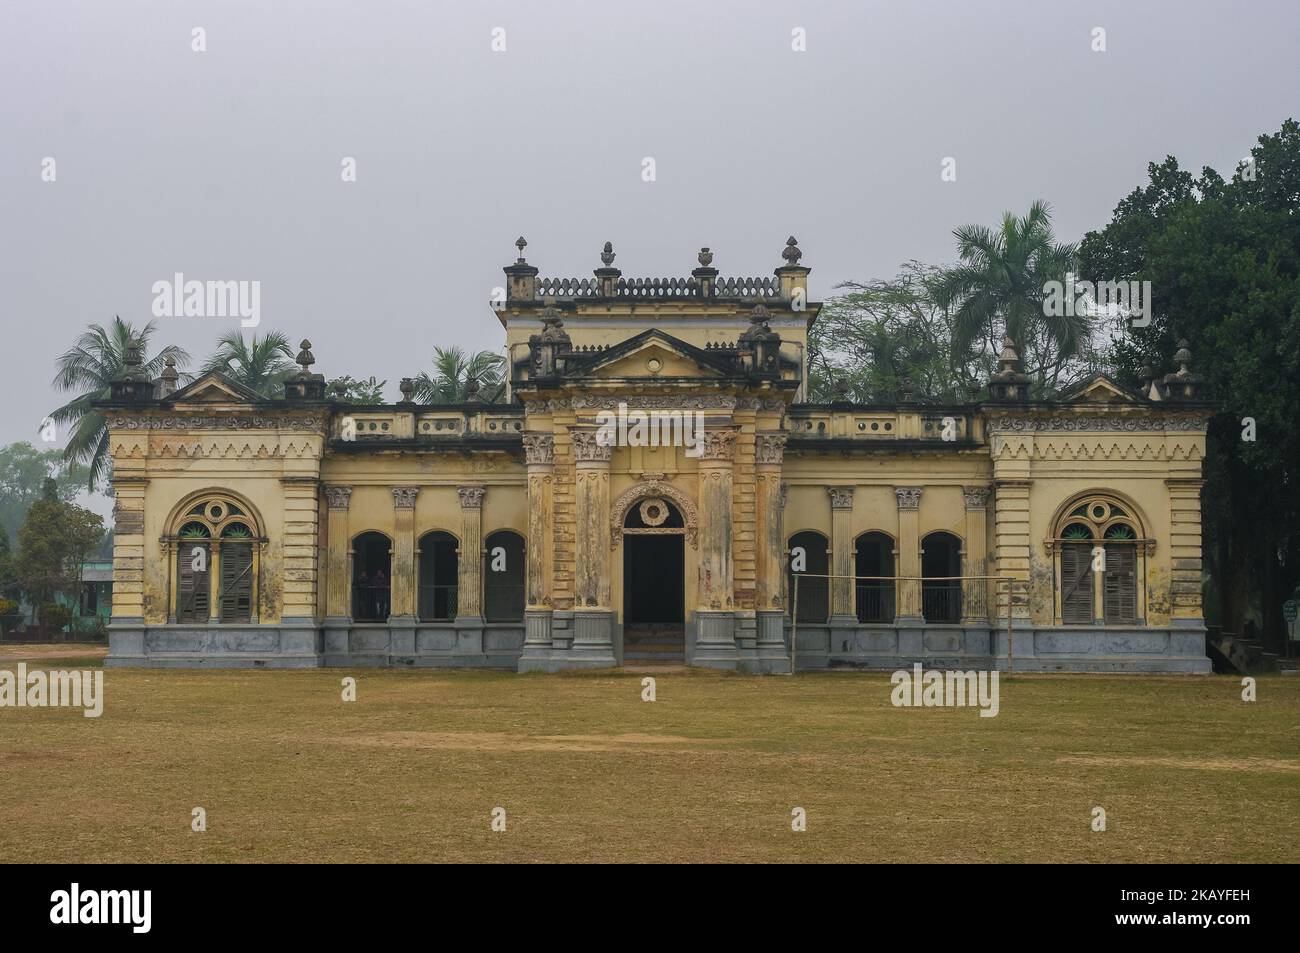 Landscape view of landmark historical rajbari or royal palace in Natore, Rajshahi, Bangladesh Stock Photo